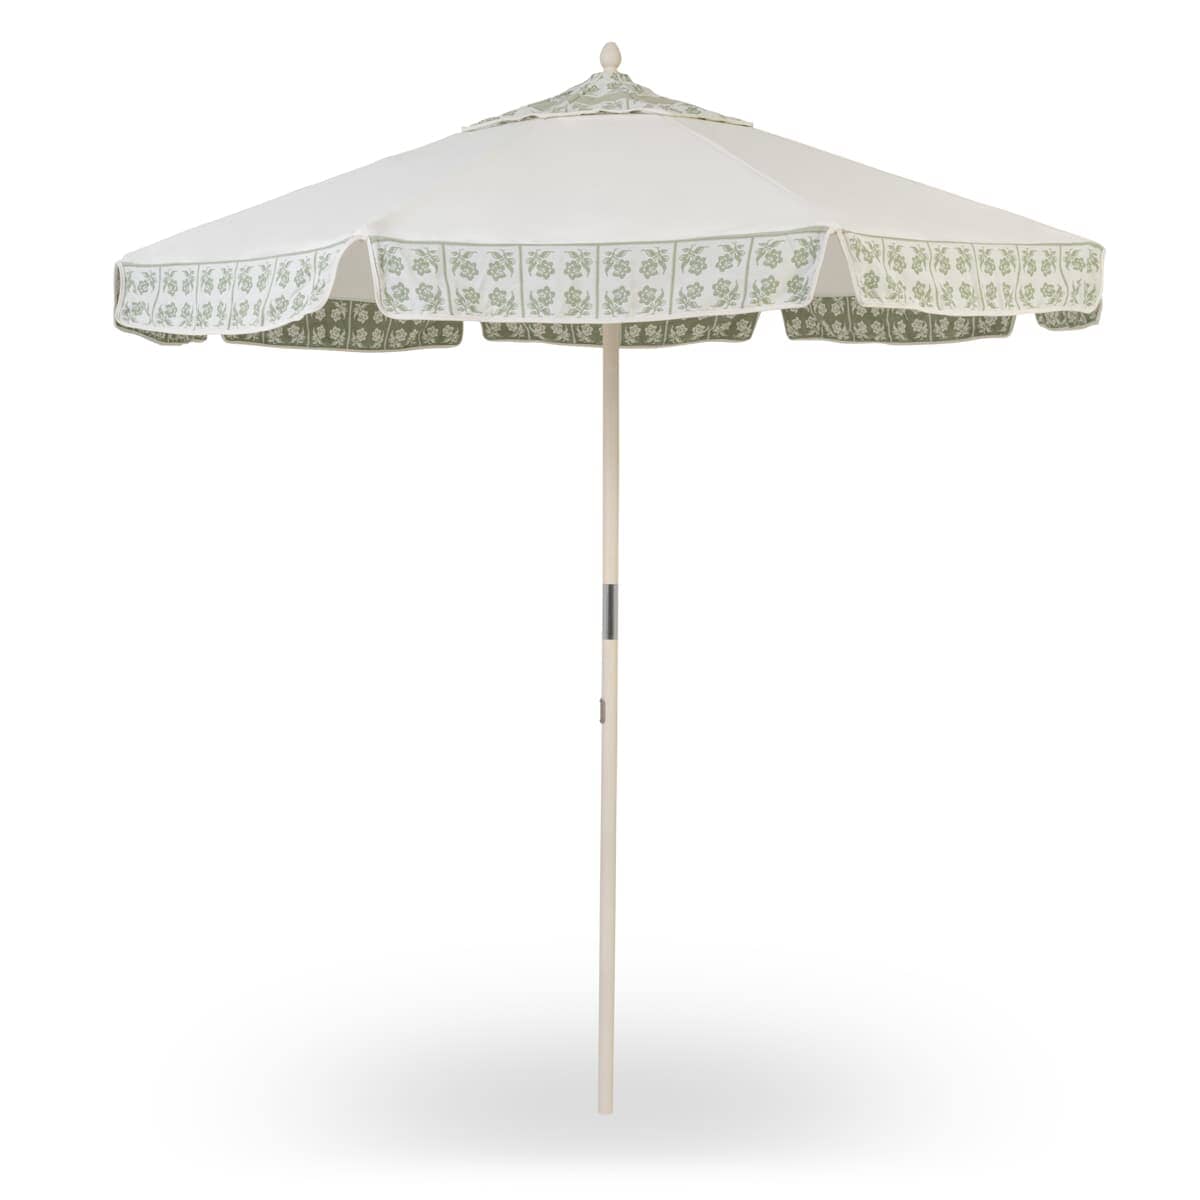 Studio image of jacquard market umbrella